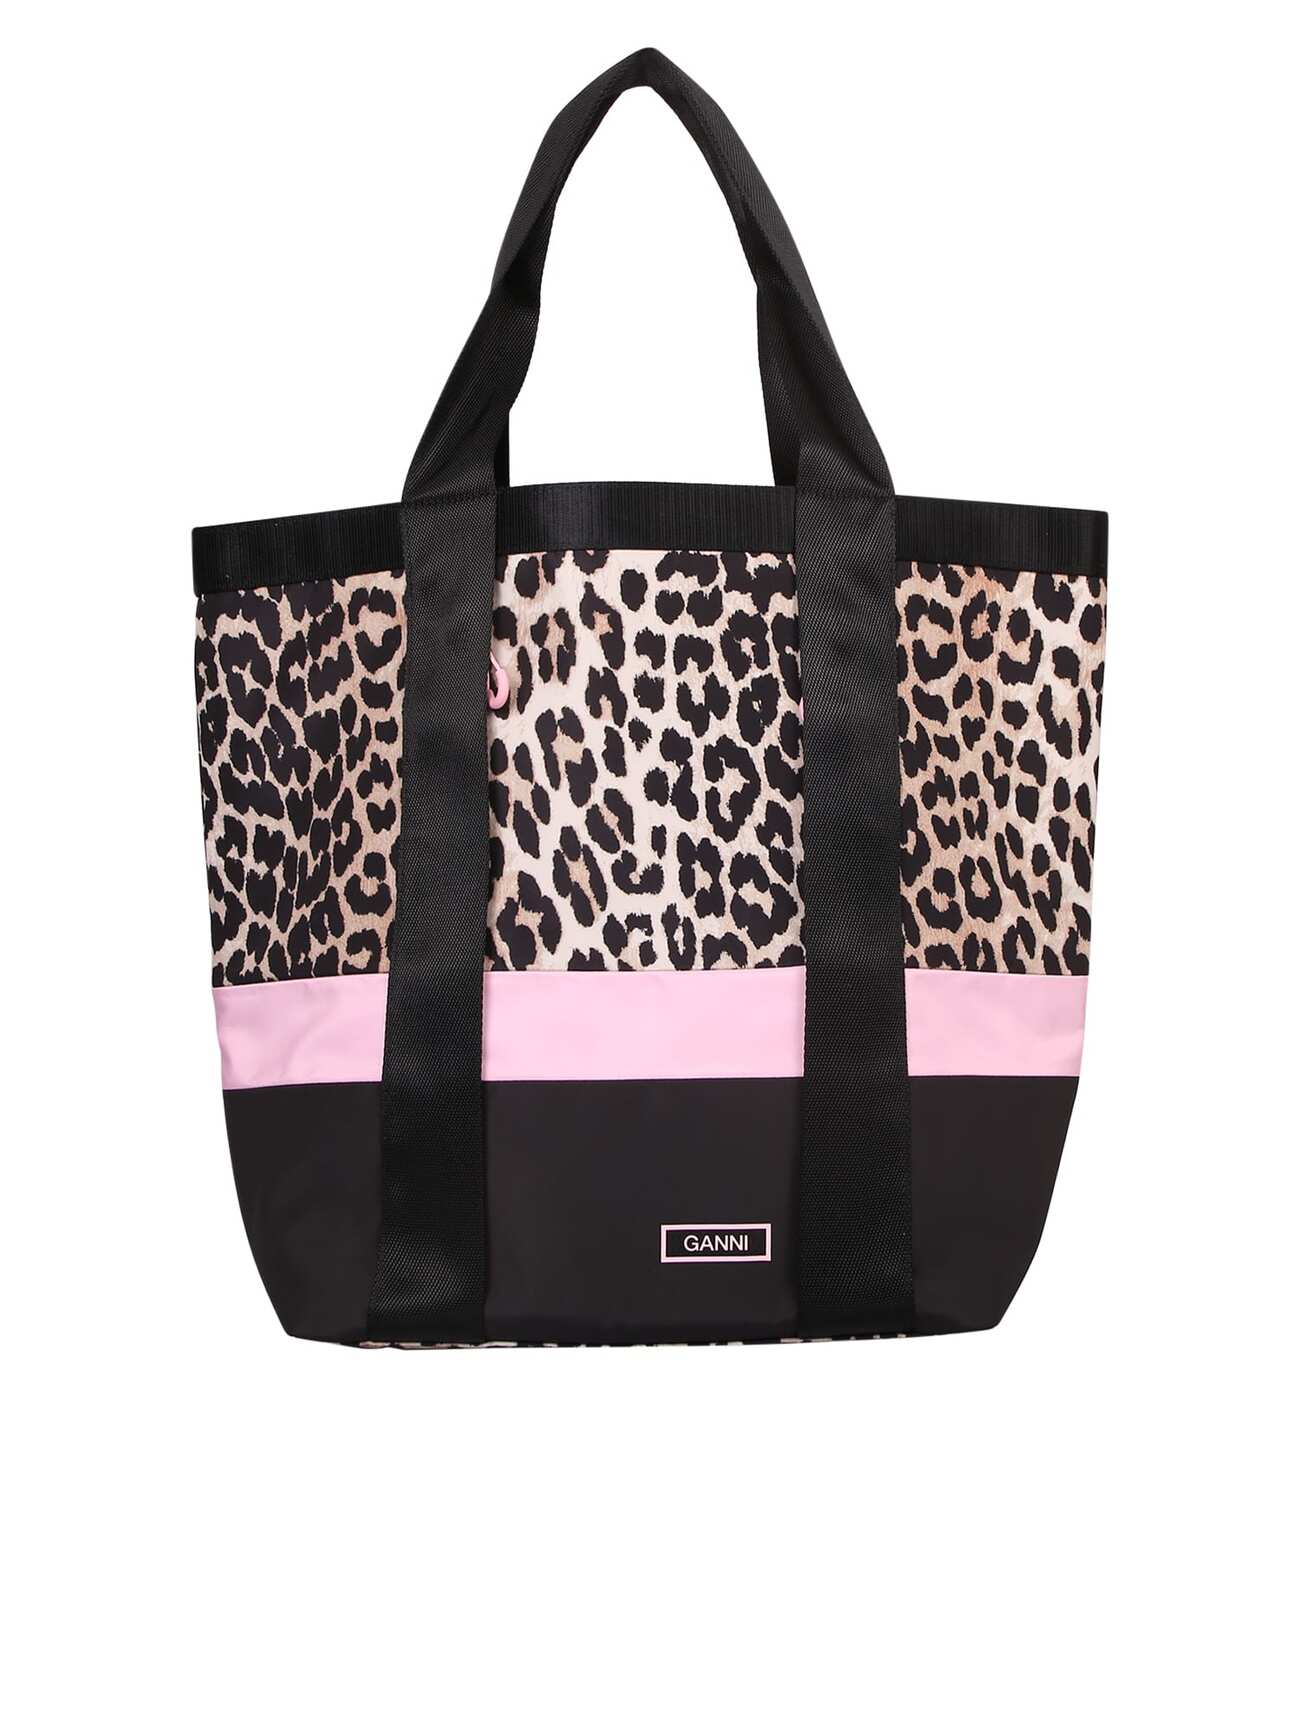 Ganni Leopard-print Panel Tote Bag in multi